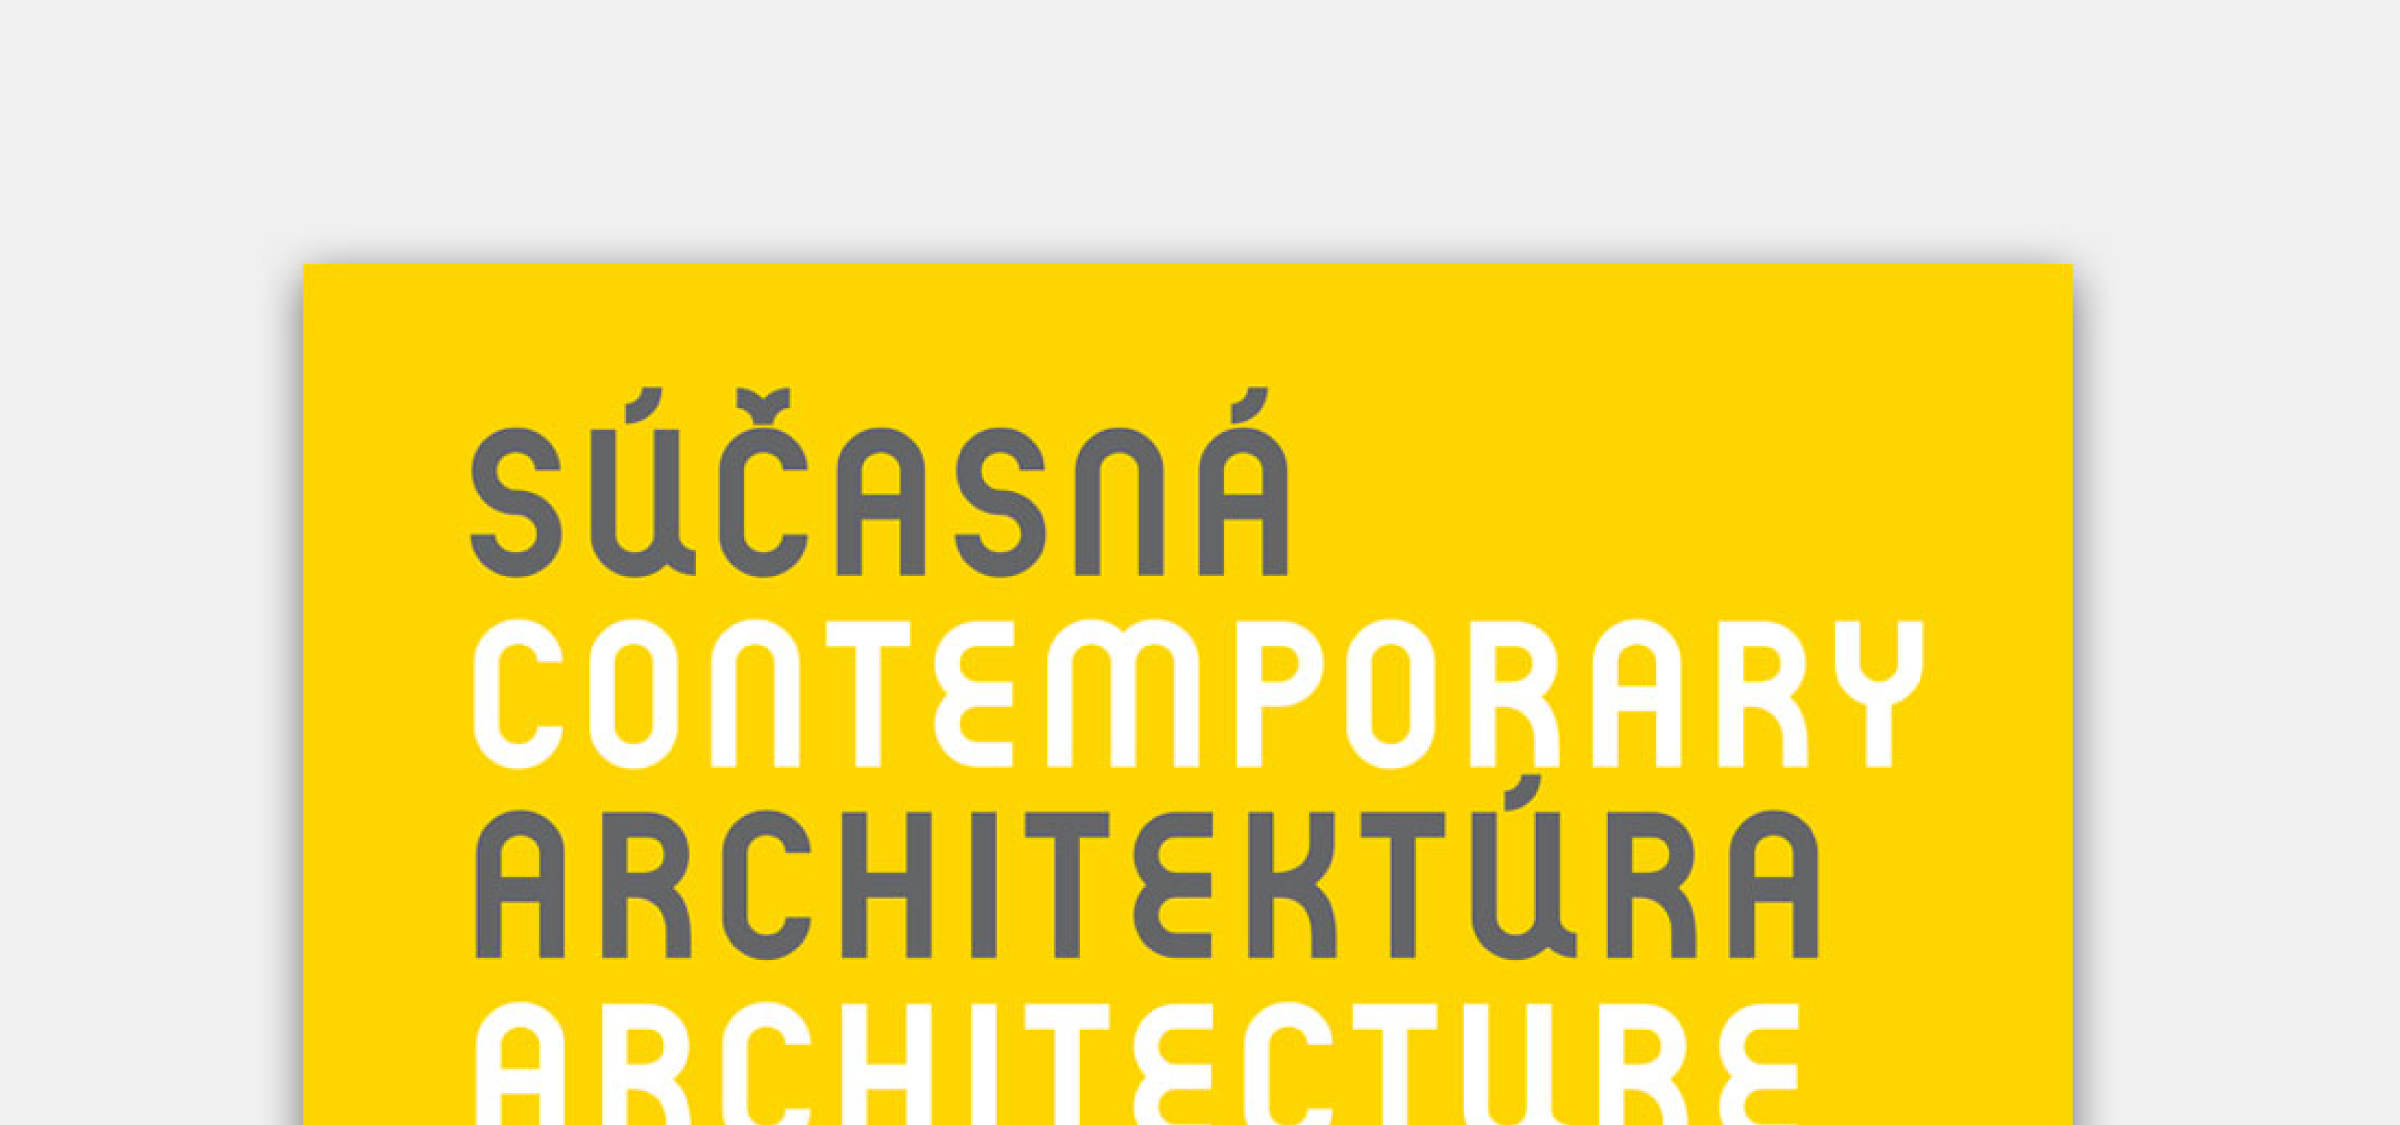 Exhibition East Side Architecture | News | Atrium Architekti